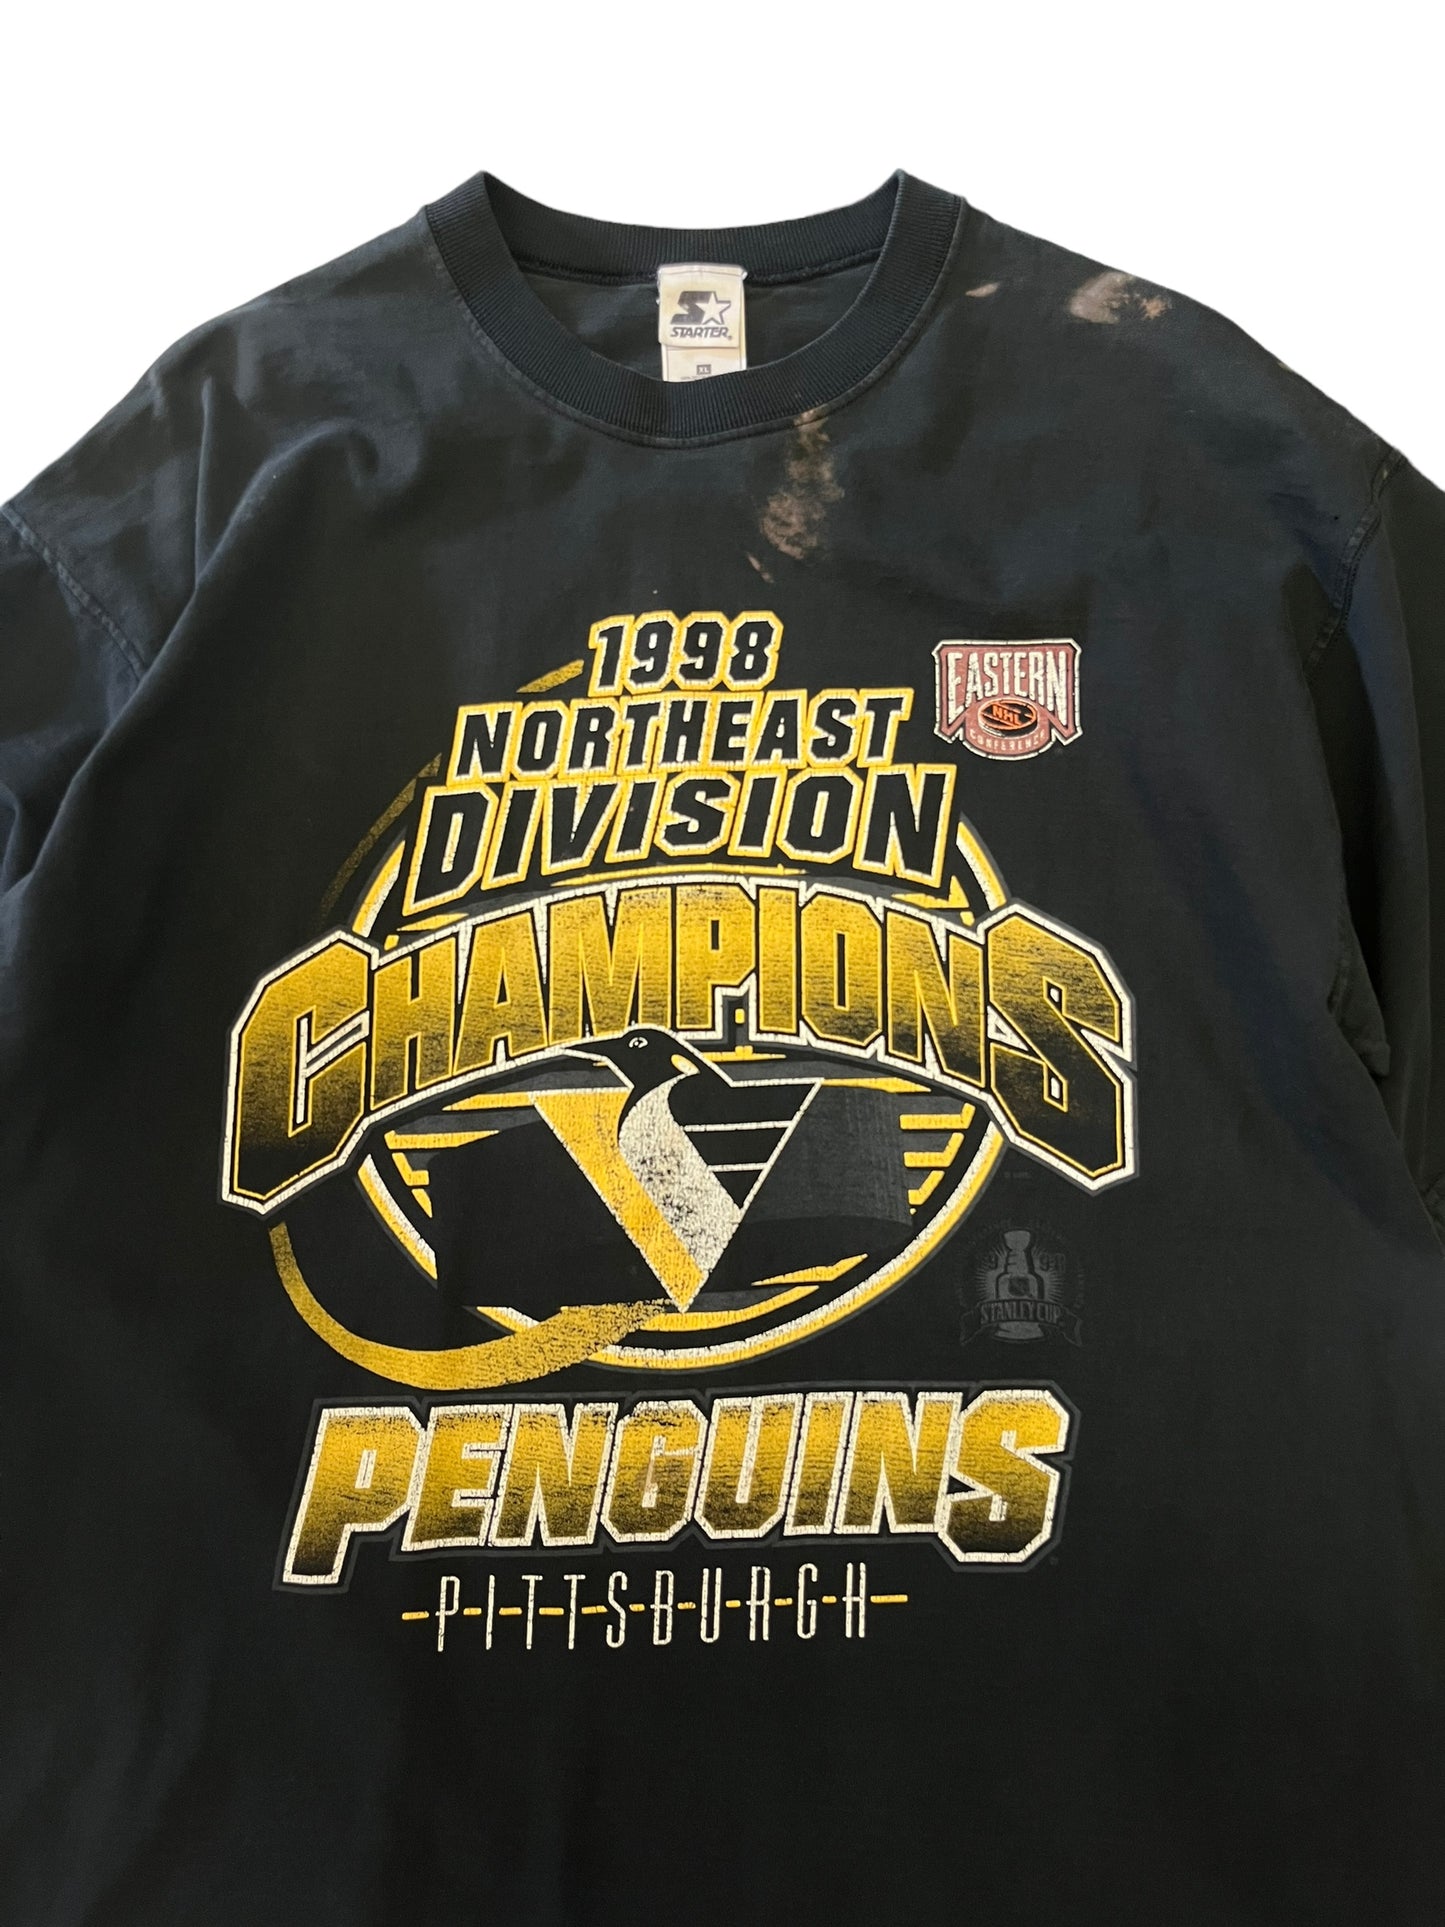 (XL) 1998 Penguins Northeast Division Champs Tee